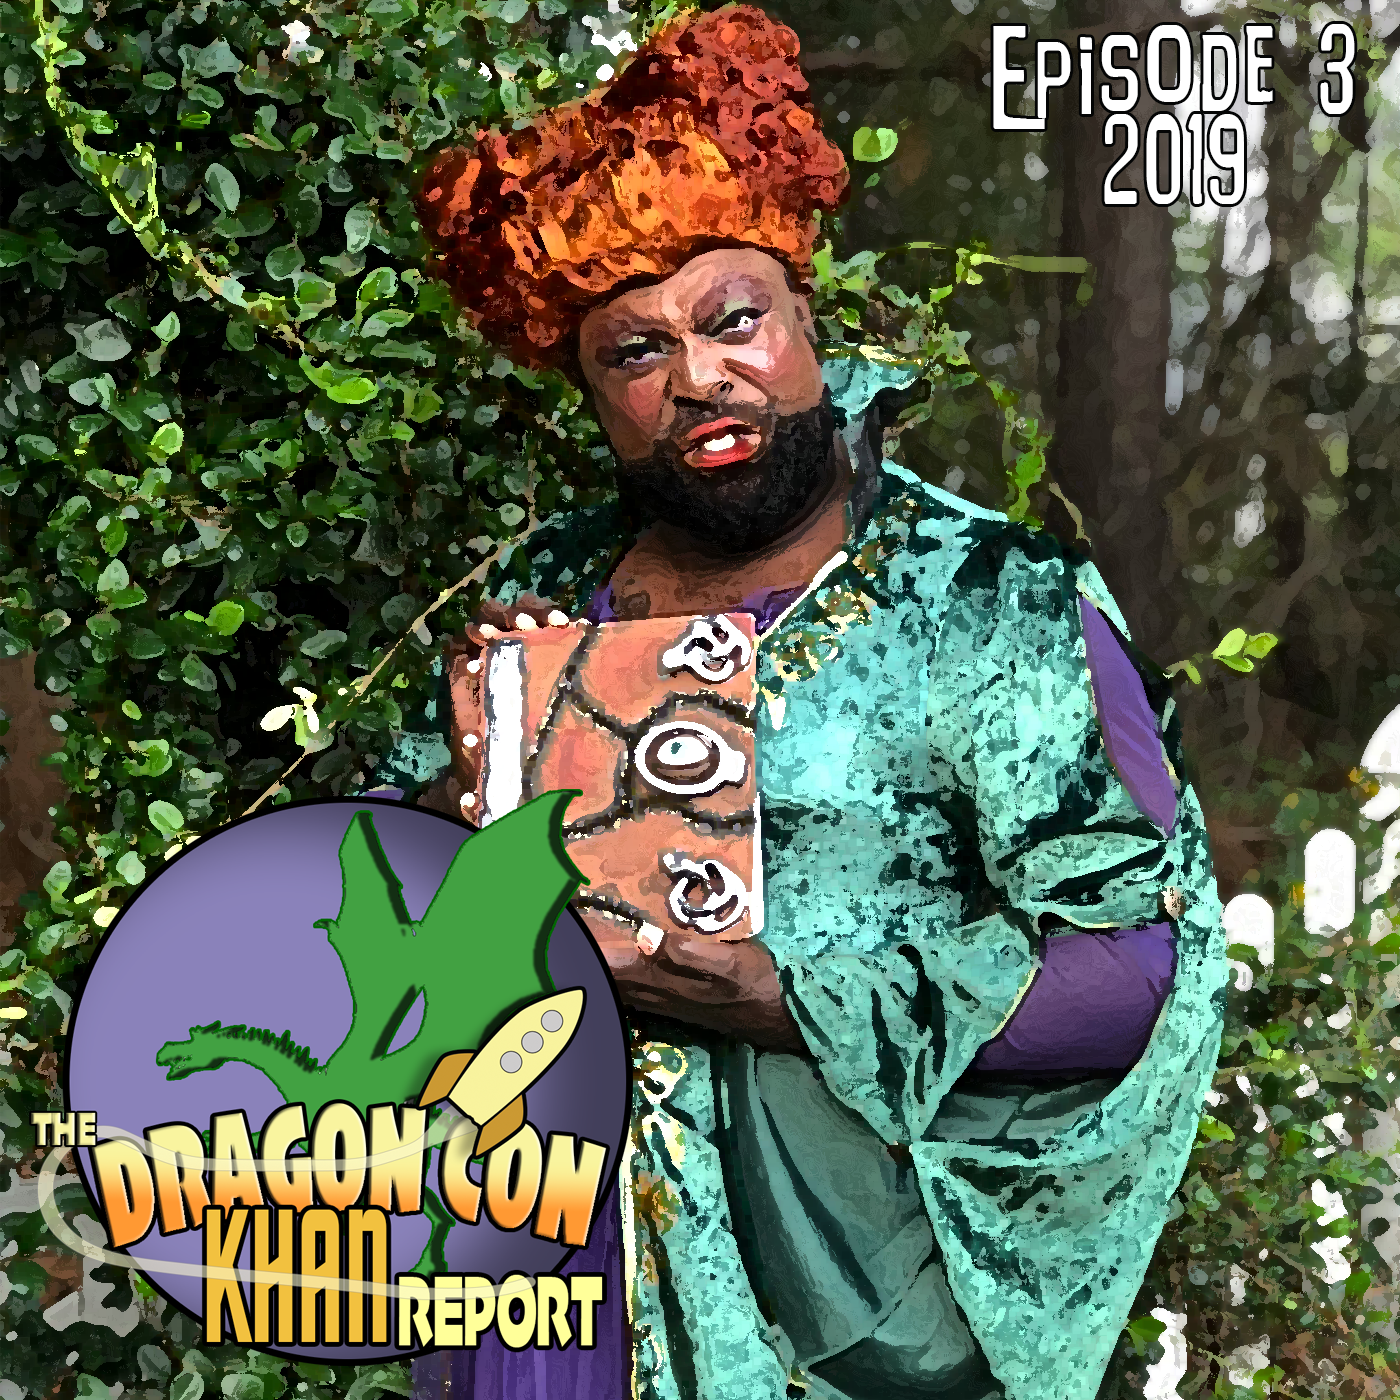 The 2019 Dragon Con Khan Report Ep 3